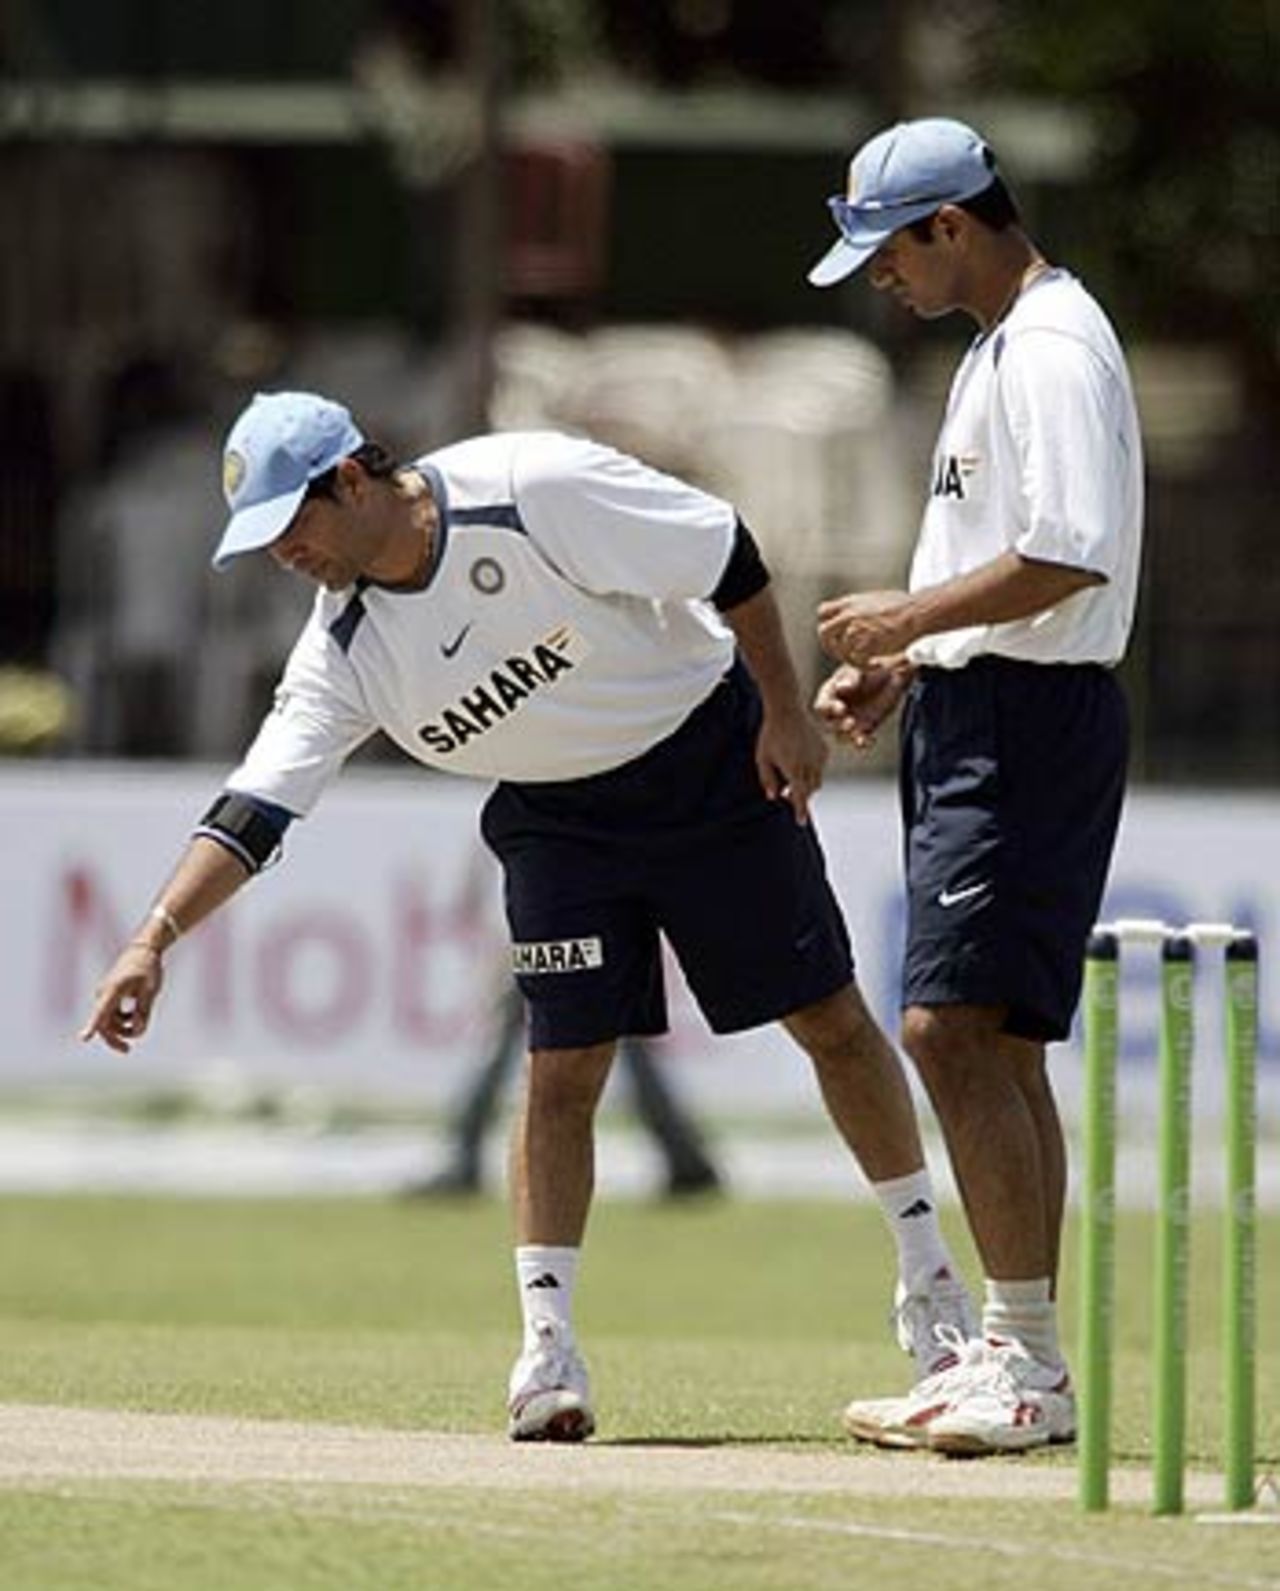 Sachin Tendulkar and Rahul Dravid stare intently at the pitch, Sri Lanka v India, 1st ODI, Sinhalese Sports Club, Colombo, August 18, 2006